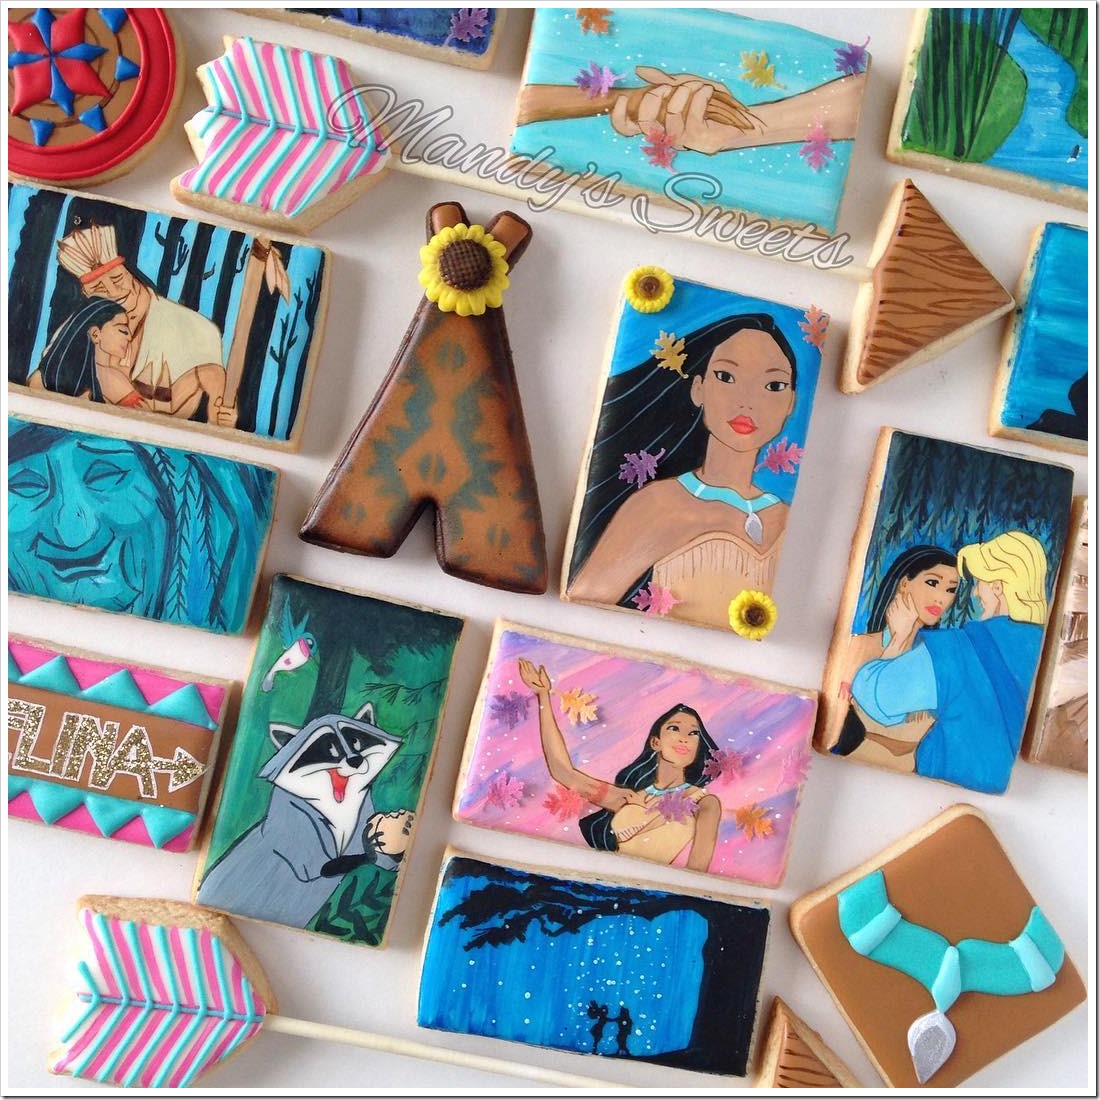 Pocahontas Cookies